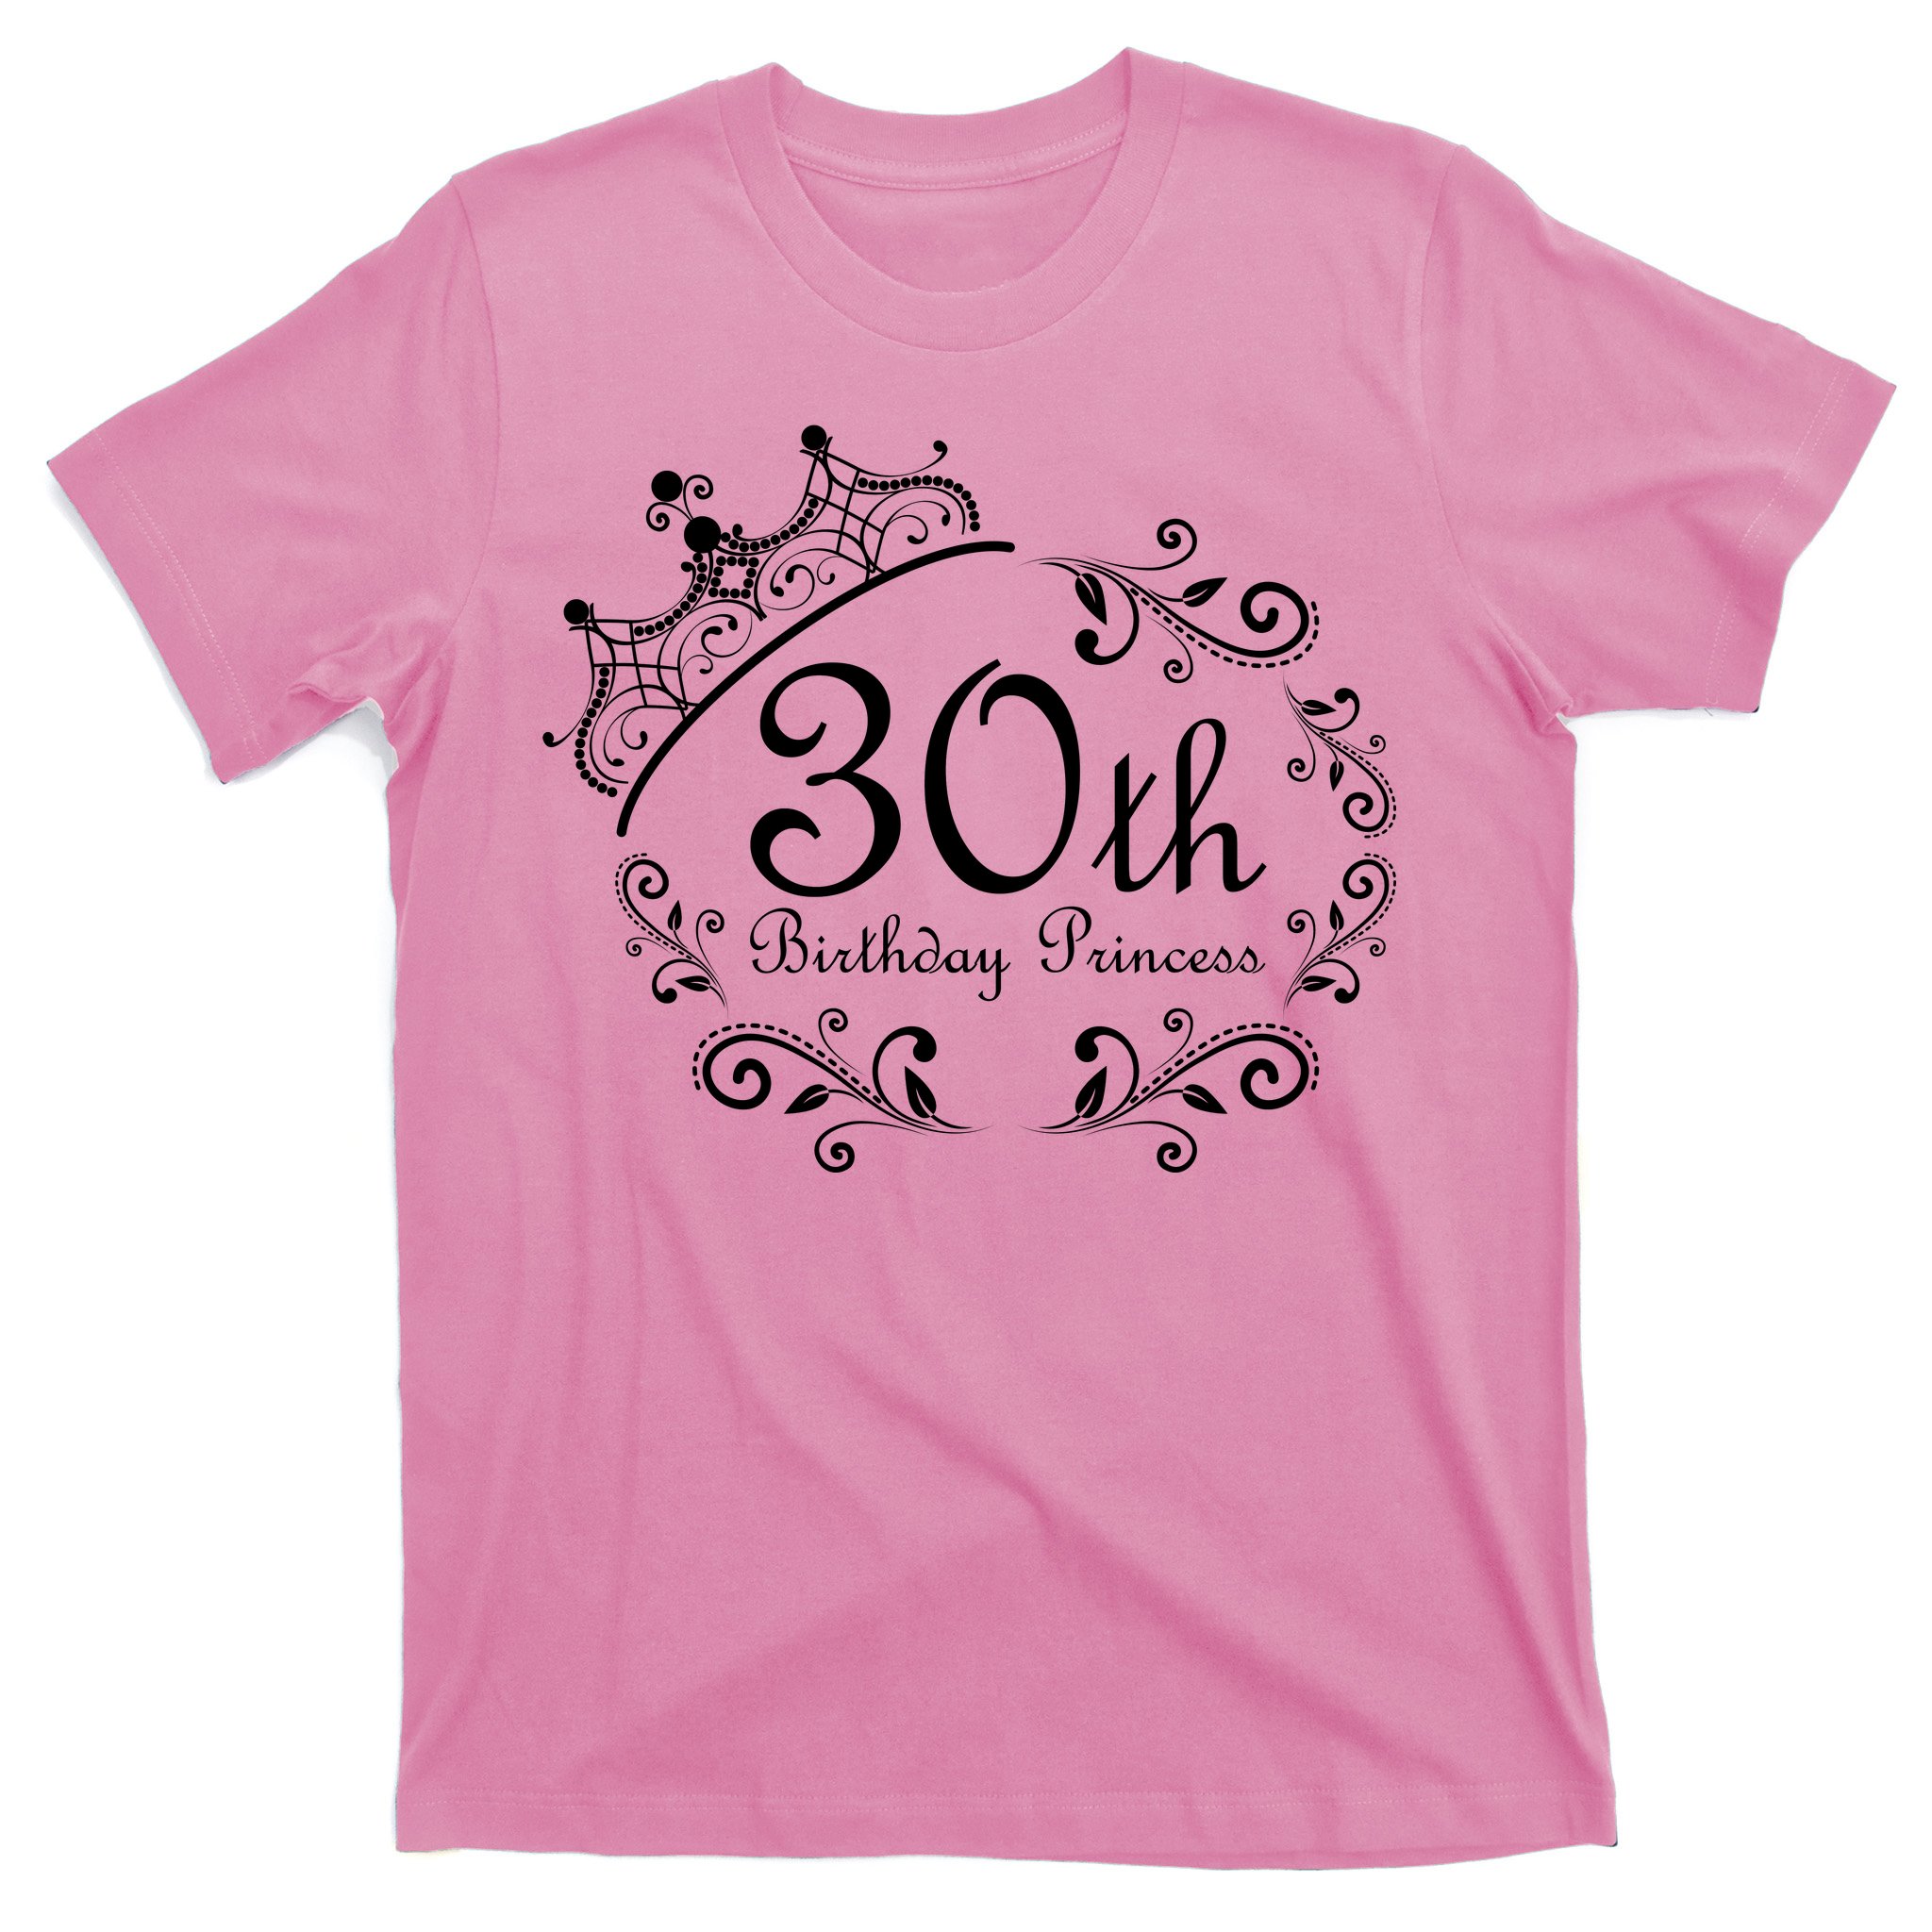 Funny 30th birthday Tank 30th birthday Racerback Tank Top T-Shirt Cool Shirt for 30th birthday